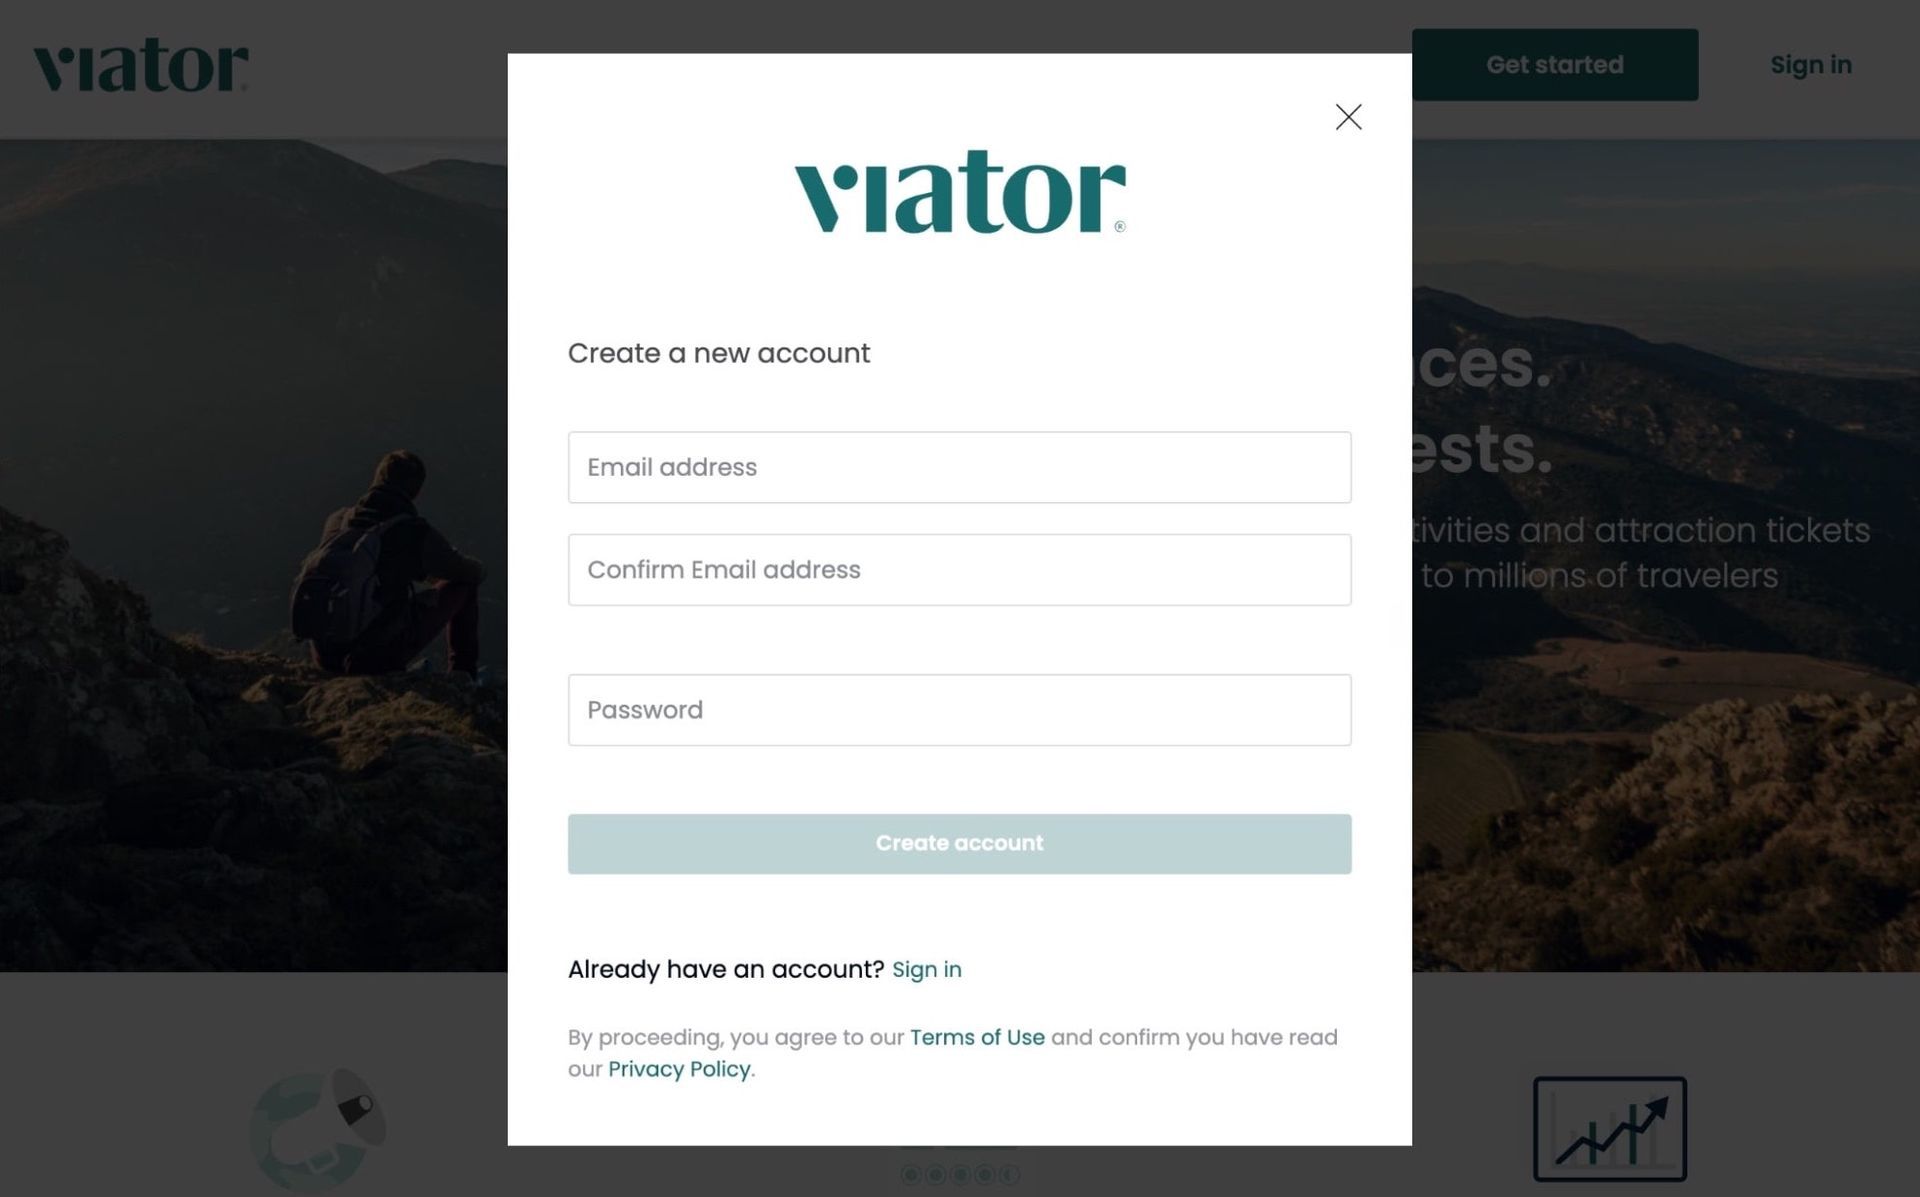 Viator: Create a new account